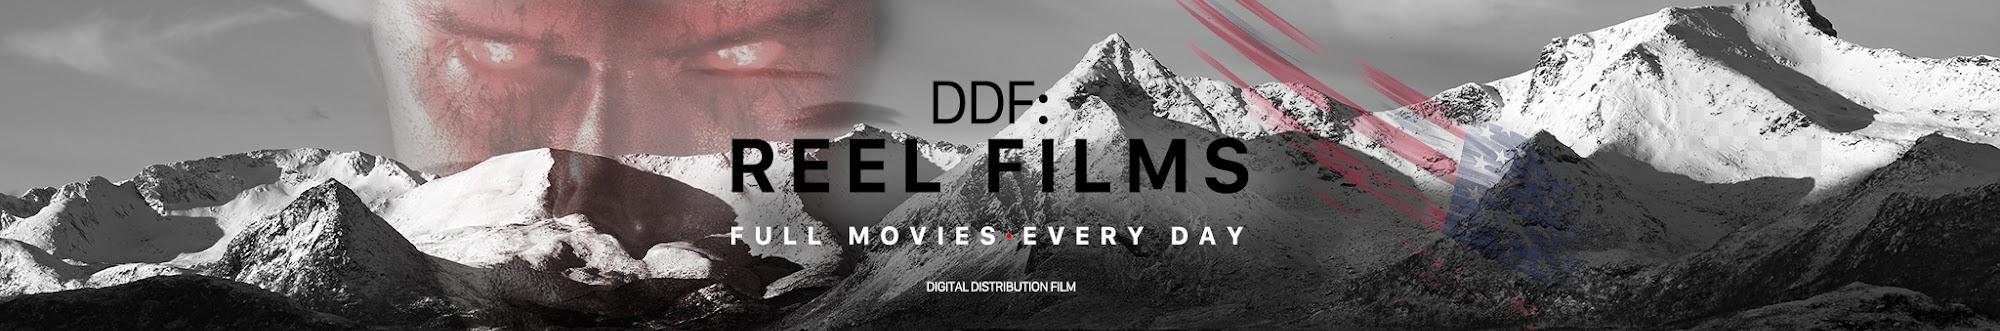 DDF: Reel Films